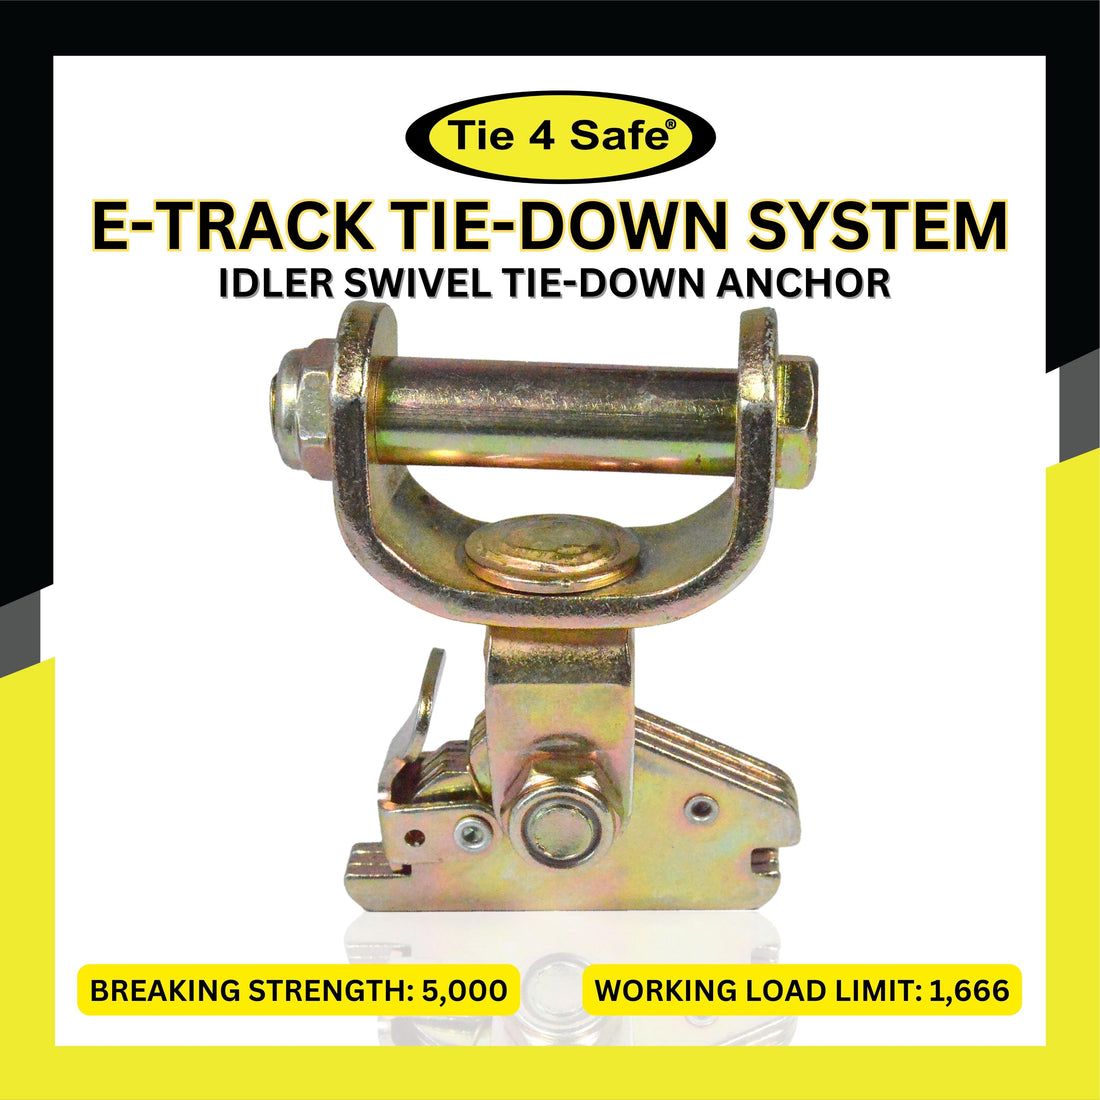 E-Track Idler Swivel Tie-Down Anchor